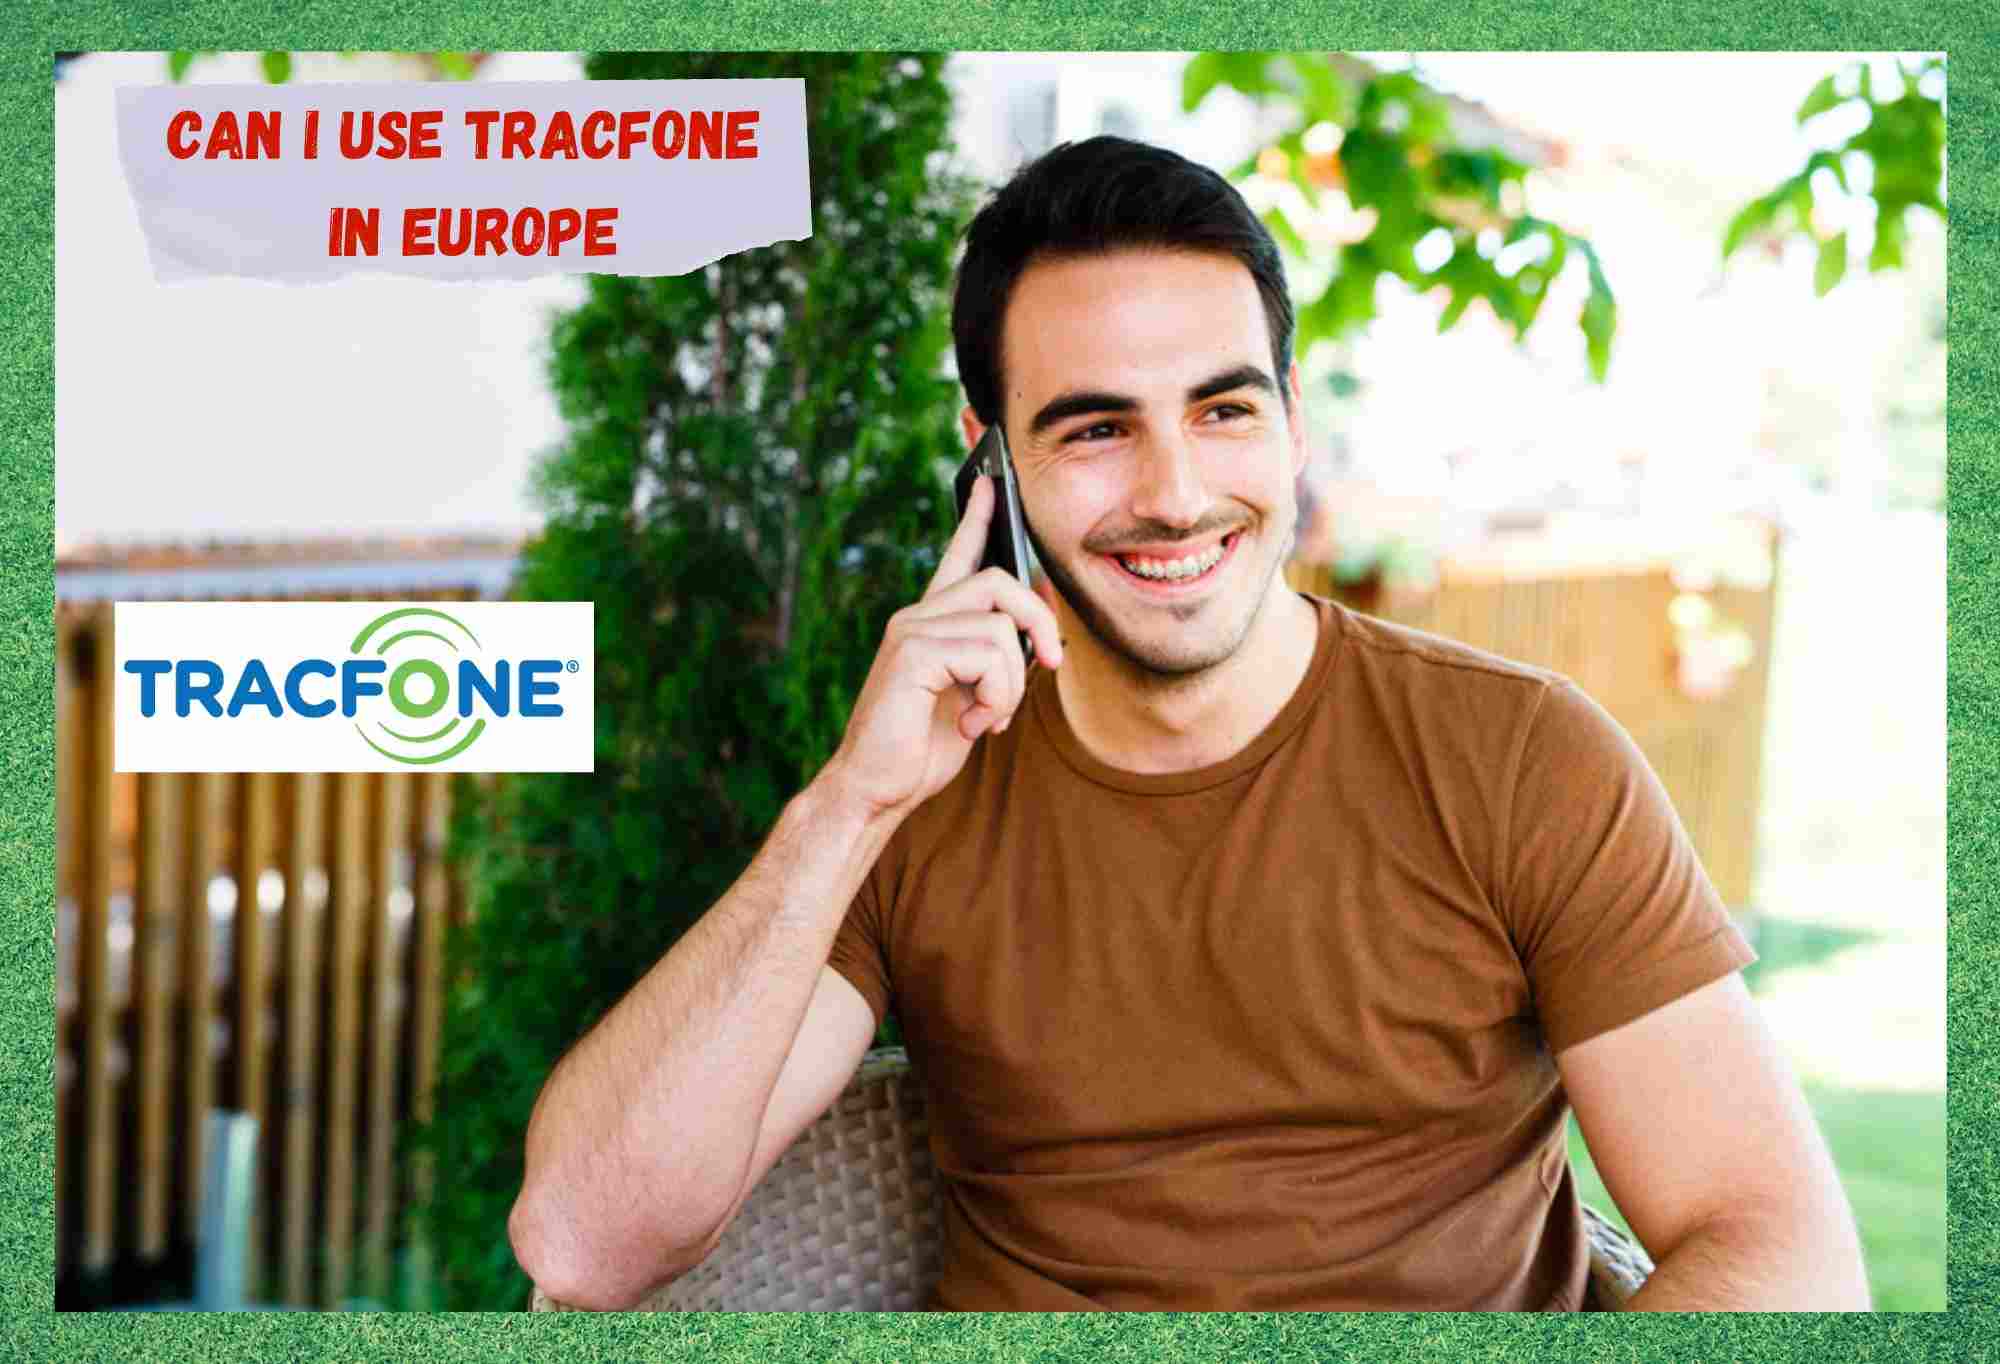 Dapatkah saya menggunakan TracFone di Eropa? (Dijawab)